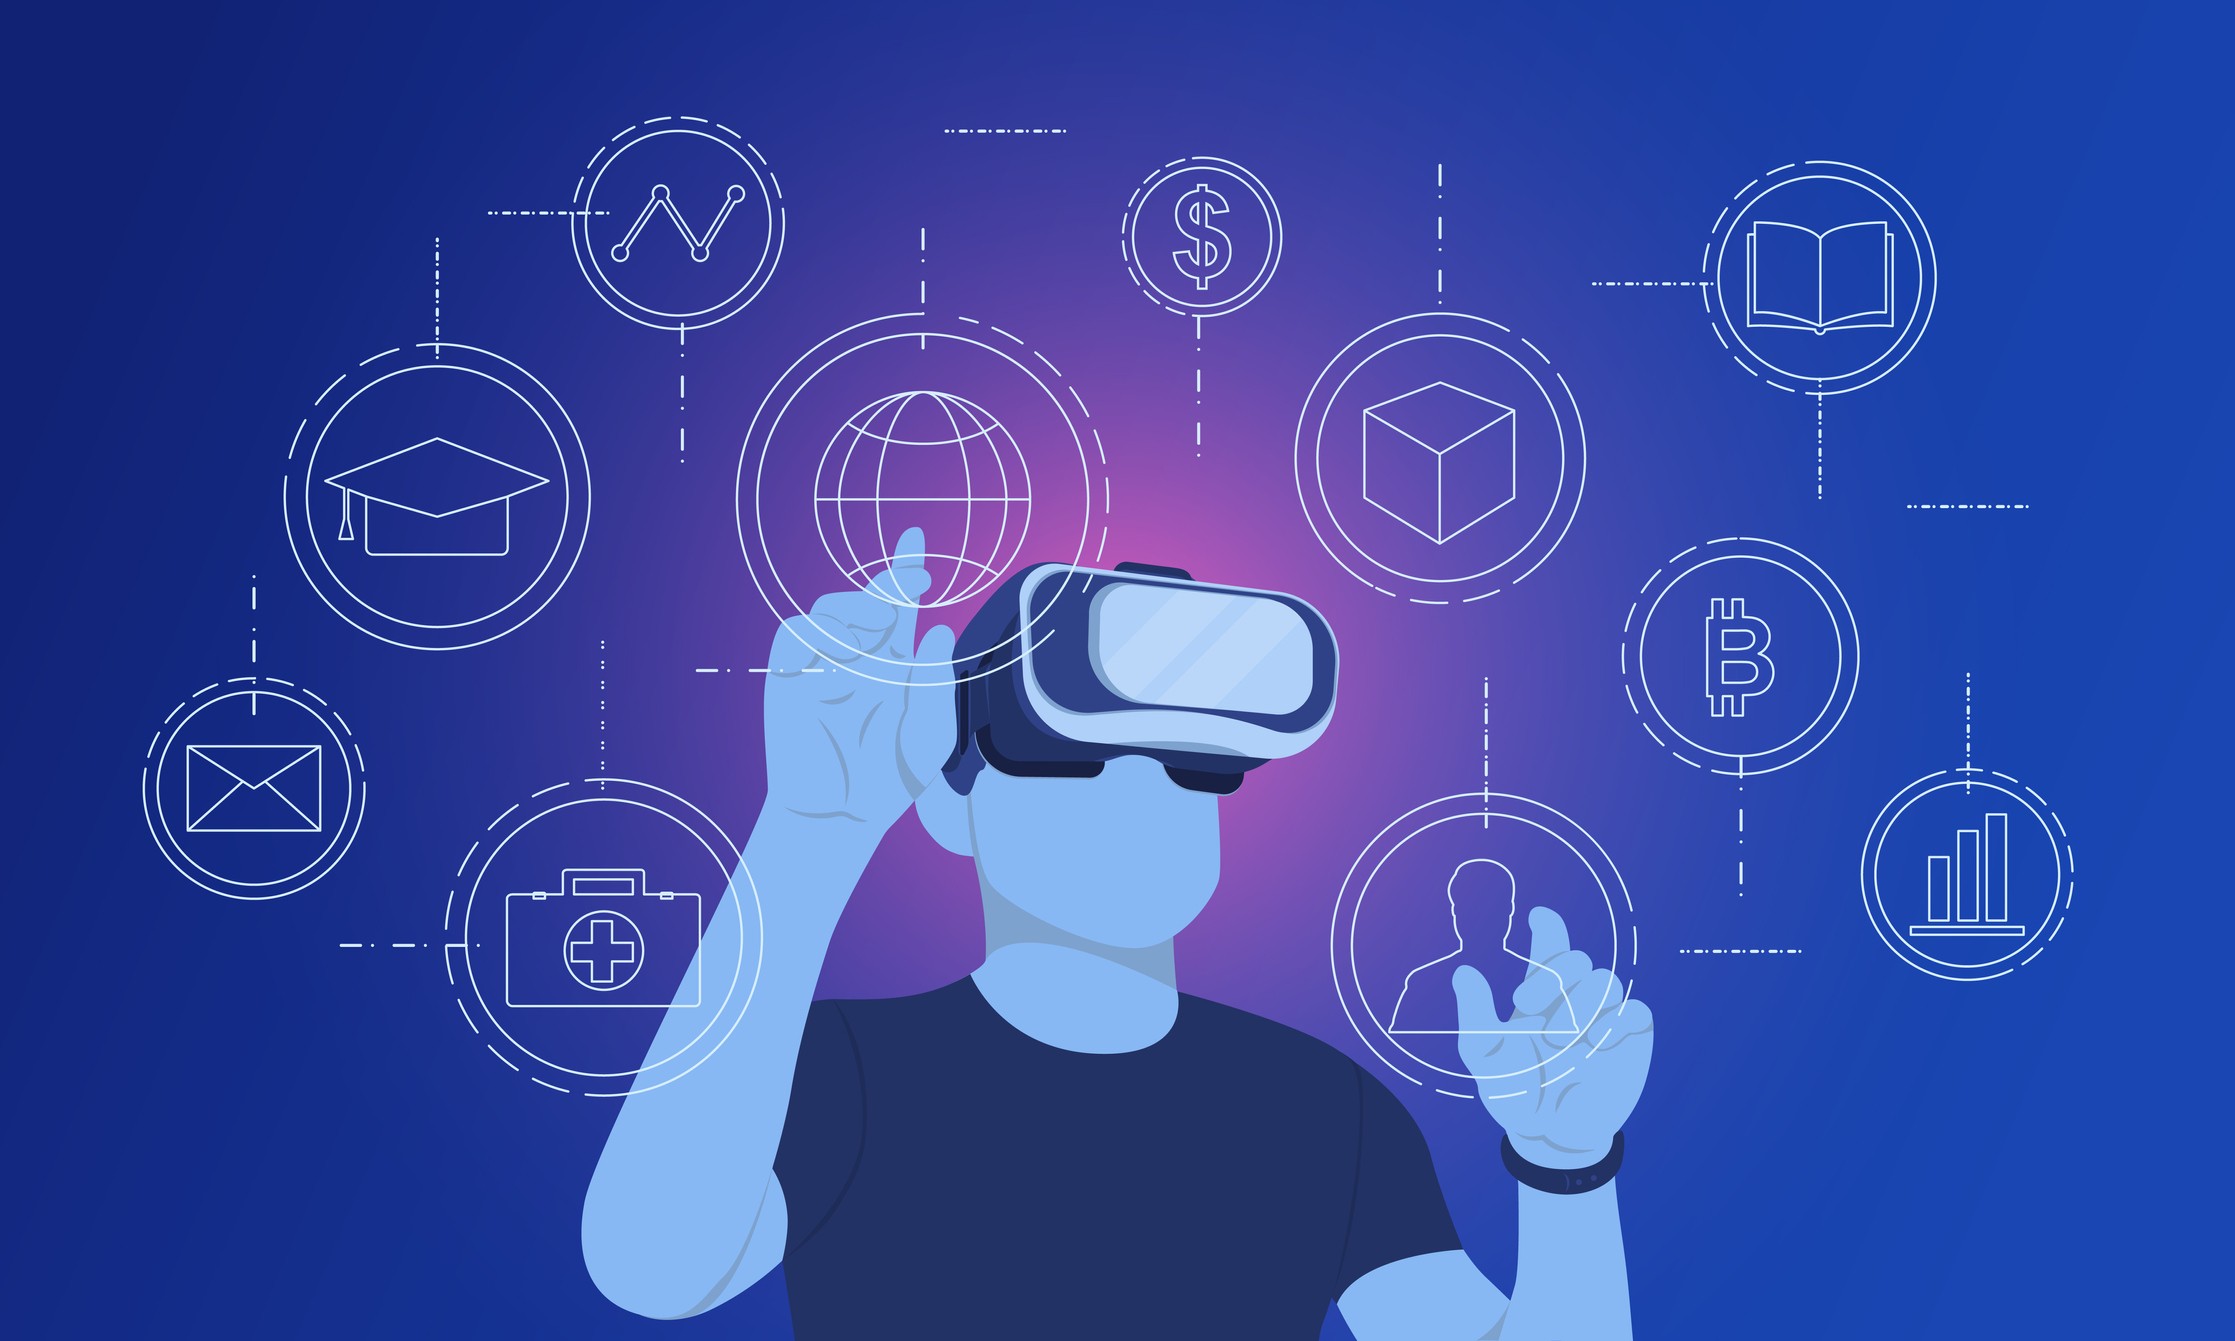 Integrating Virtual Reality into Web Design